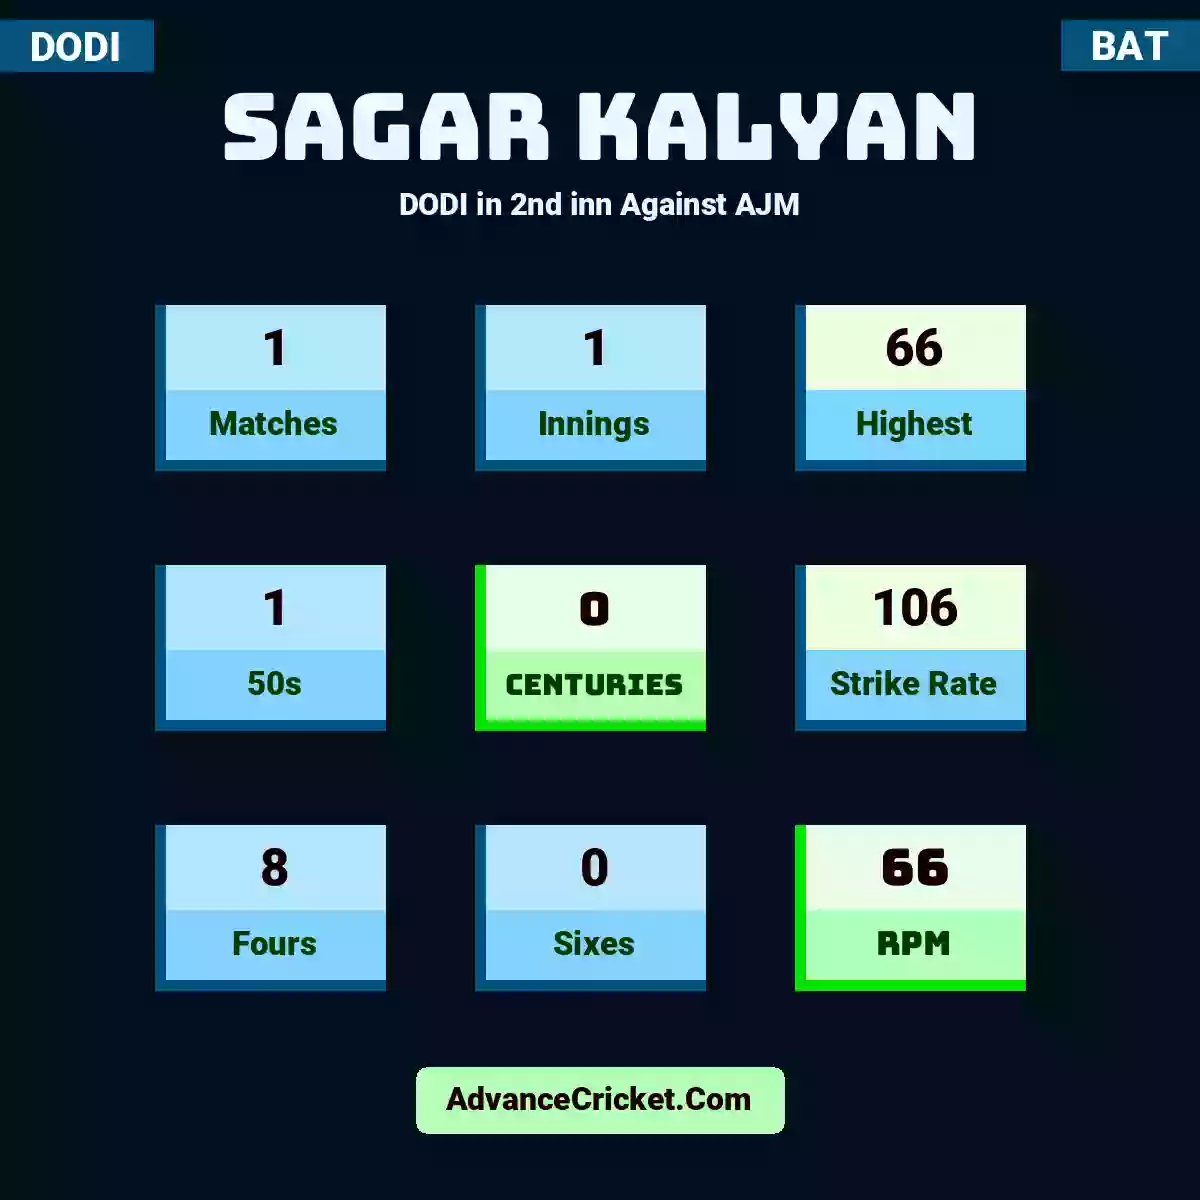 Sagar Kalyan DODI  in 2nd inn Against AJM, Sagar Kalyan played 1 matches, scored 66 runs as highest, 1 half-centuries, and 0 centuries, with a strike rate of 106. S.Kalyan hit 8 fours and 0 sixes, with an RPM of 66.